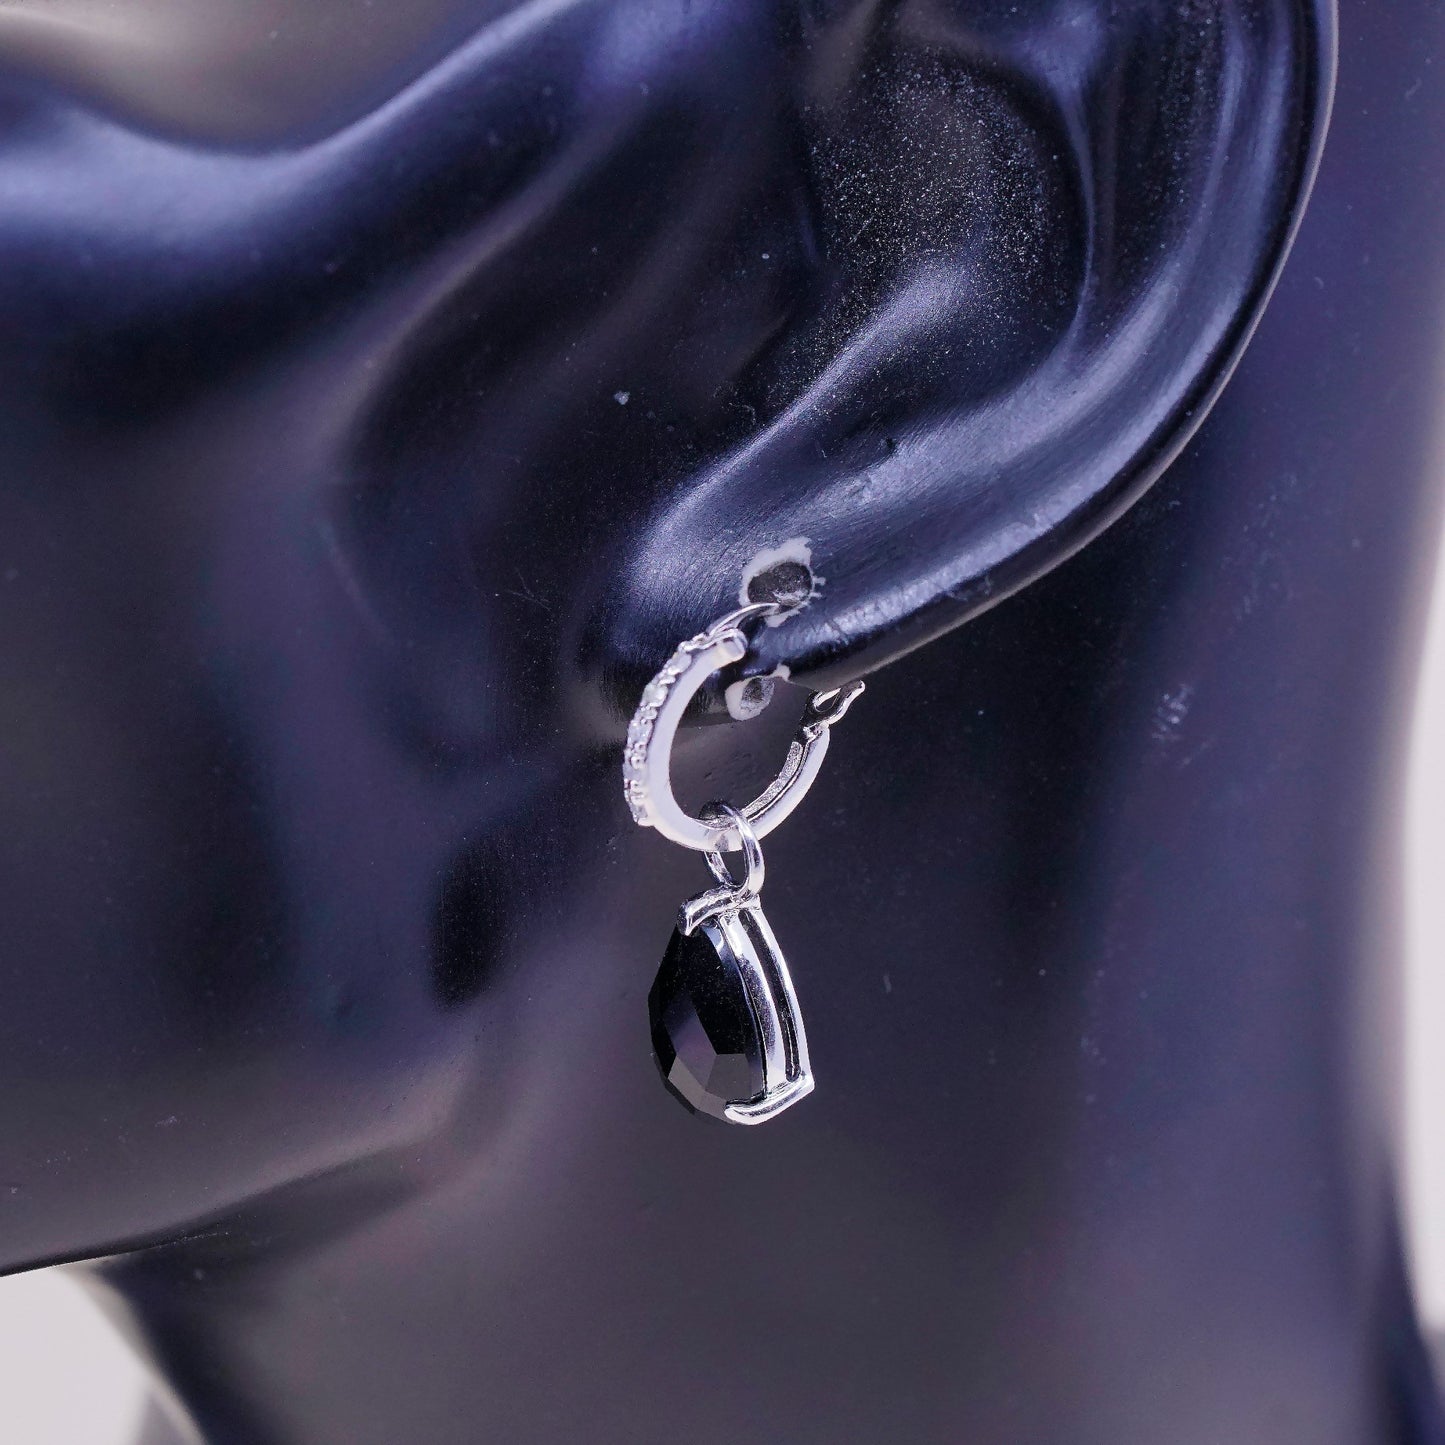 VTG sterling silver earrings, 925 hoops, huggie, W/ diamond N teardrop garnet